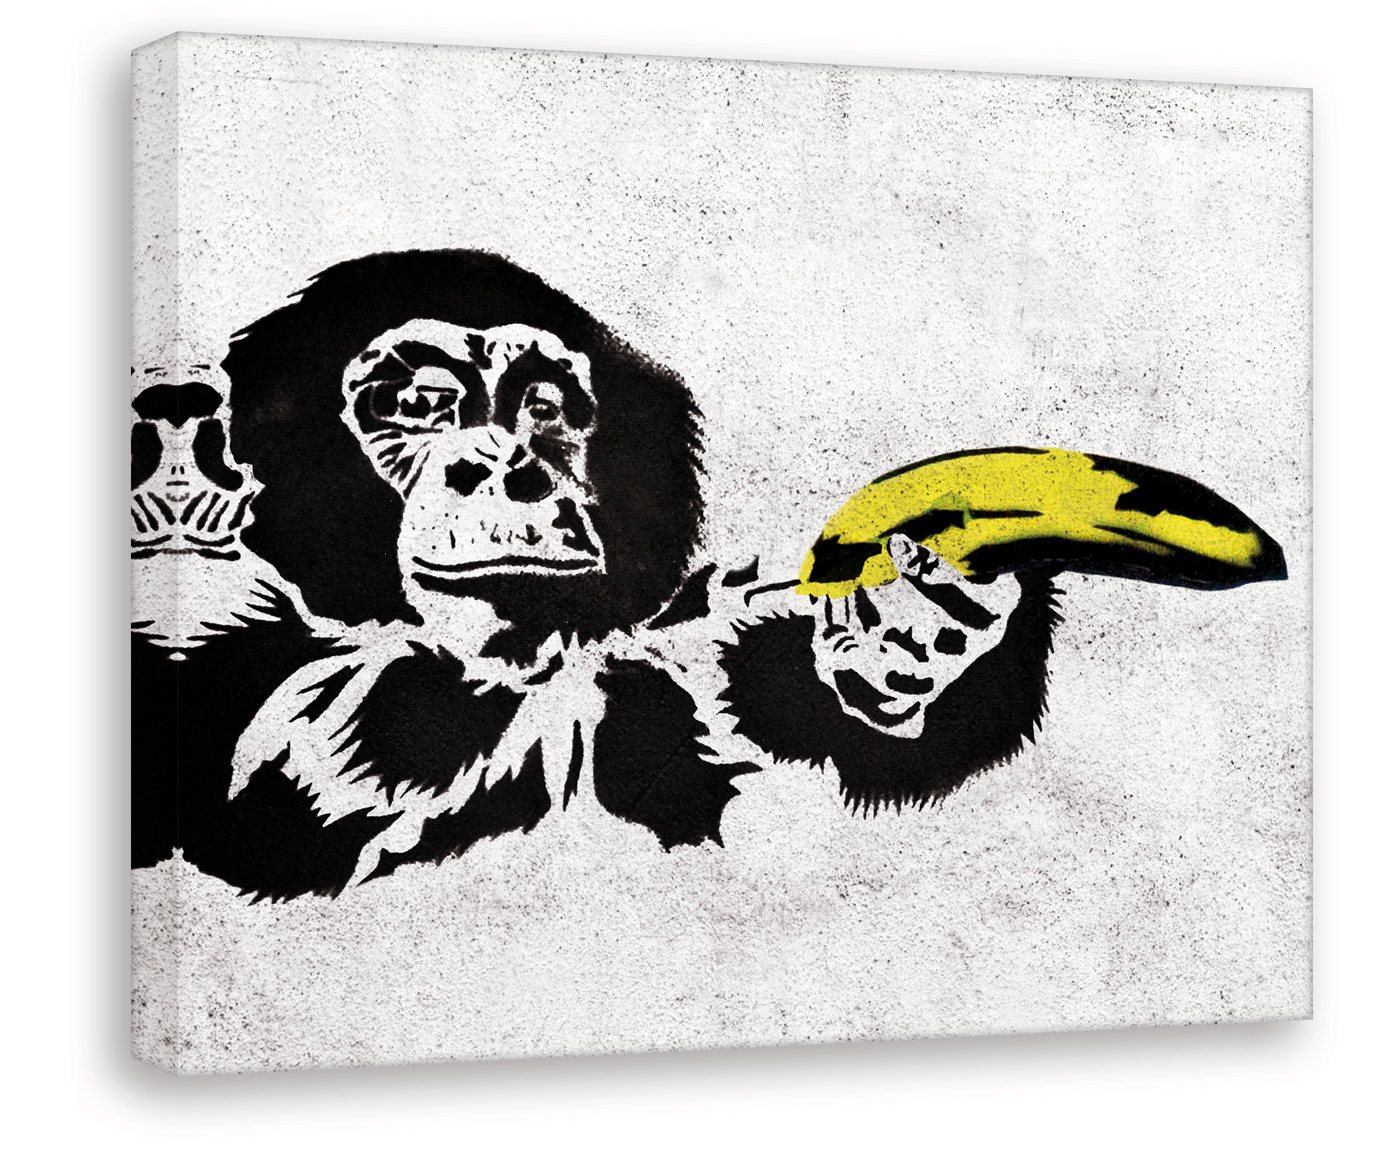 Leinwando Gemälde Banksy bilder banana Affe Gun / streetart Leinwandbilder Graffiti kunst wandbild von Leinwando